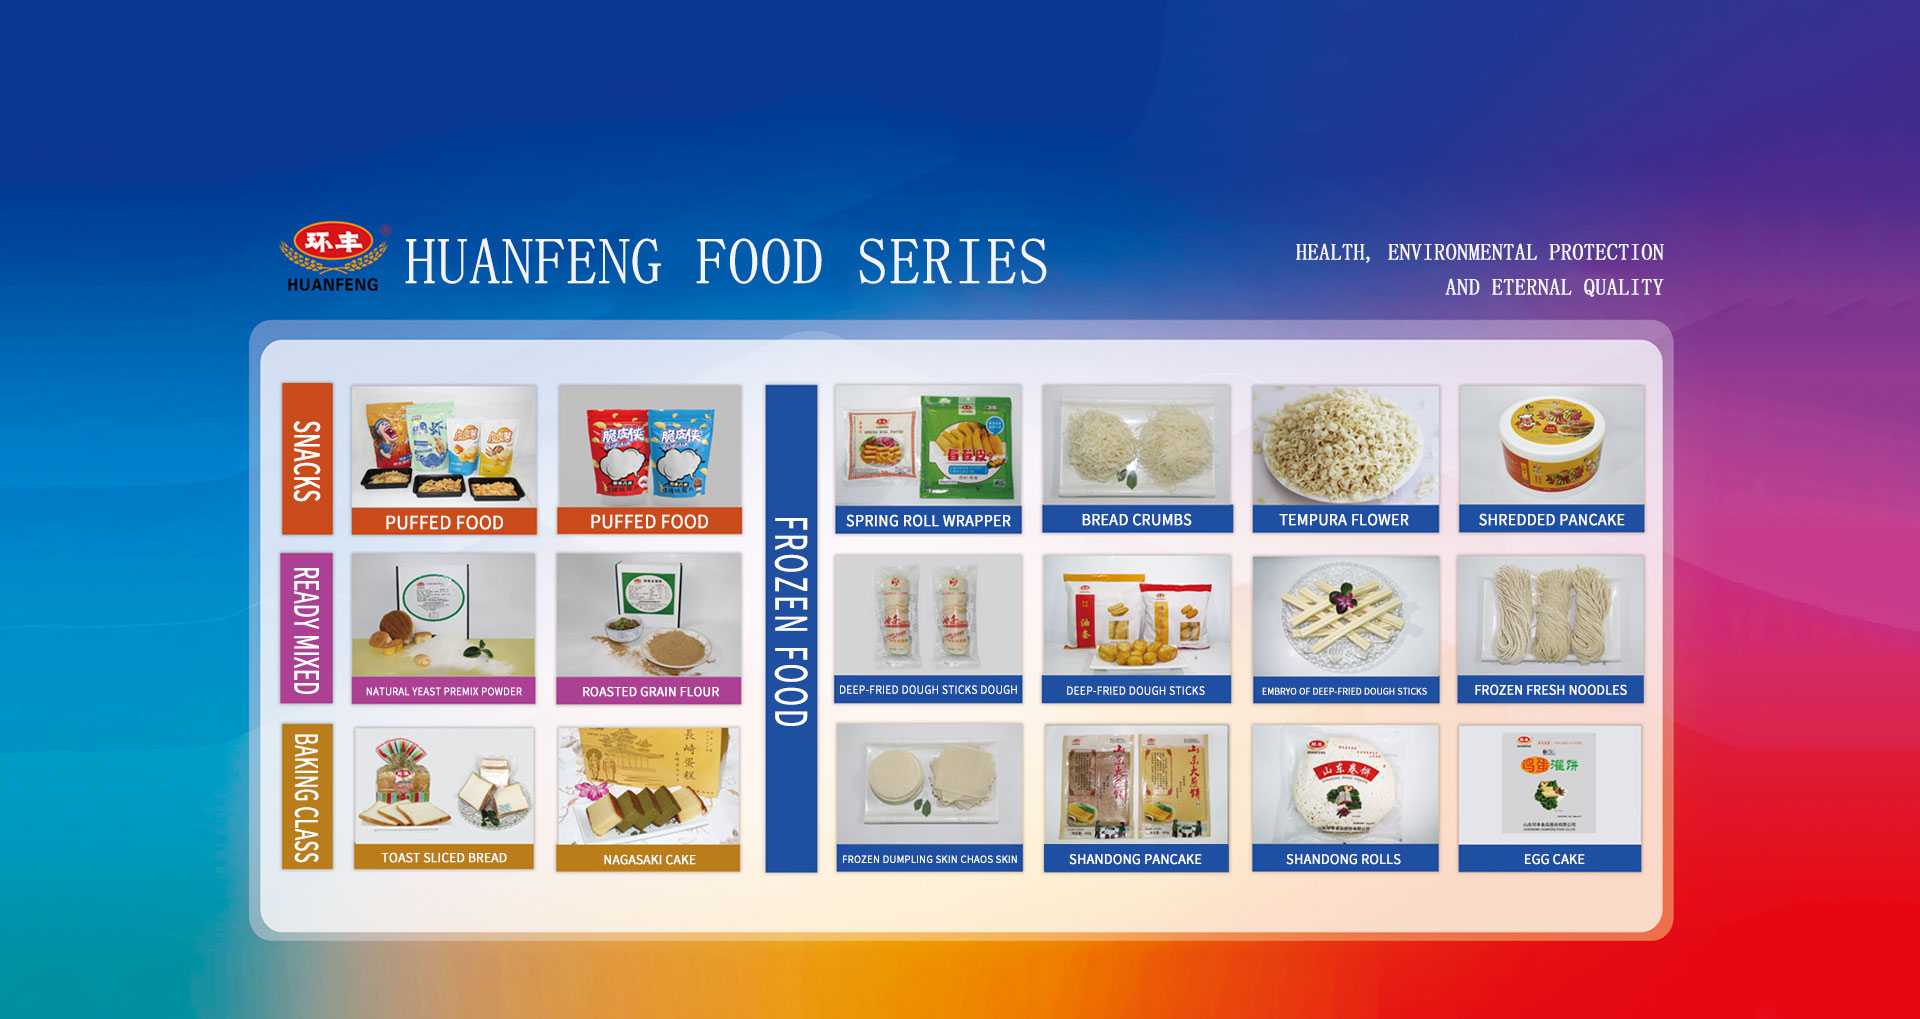 Shandong Huanfeng Food Co., Ltd